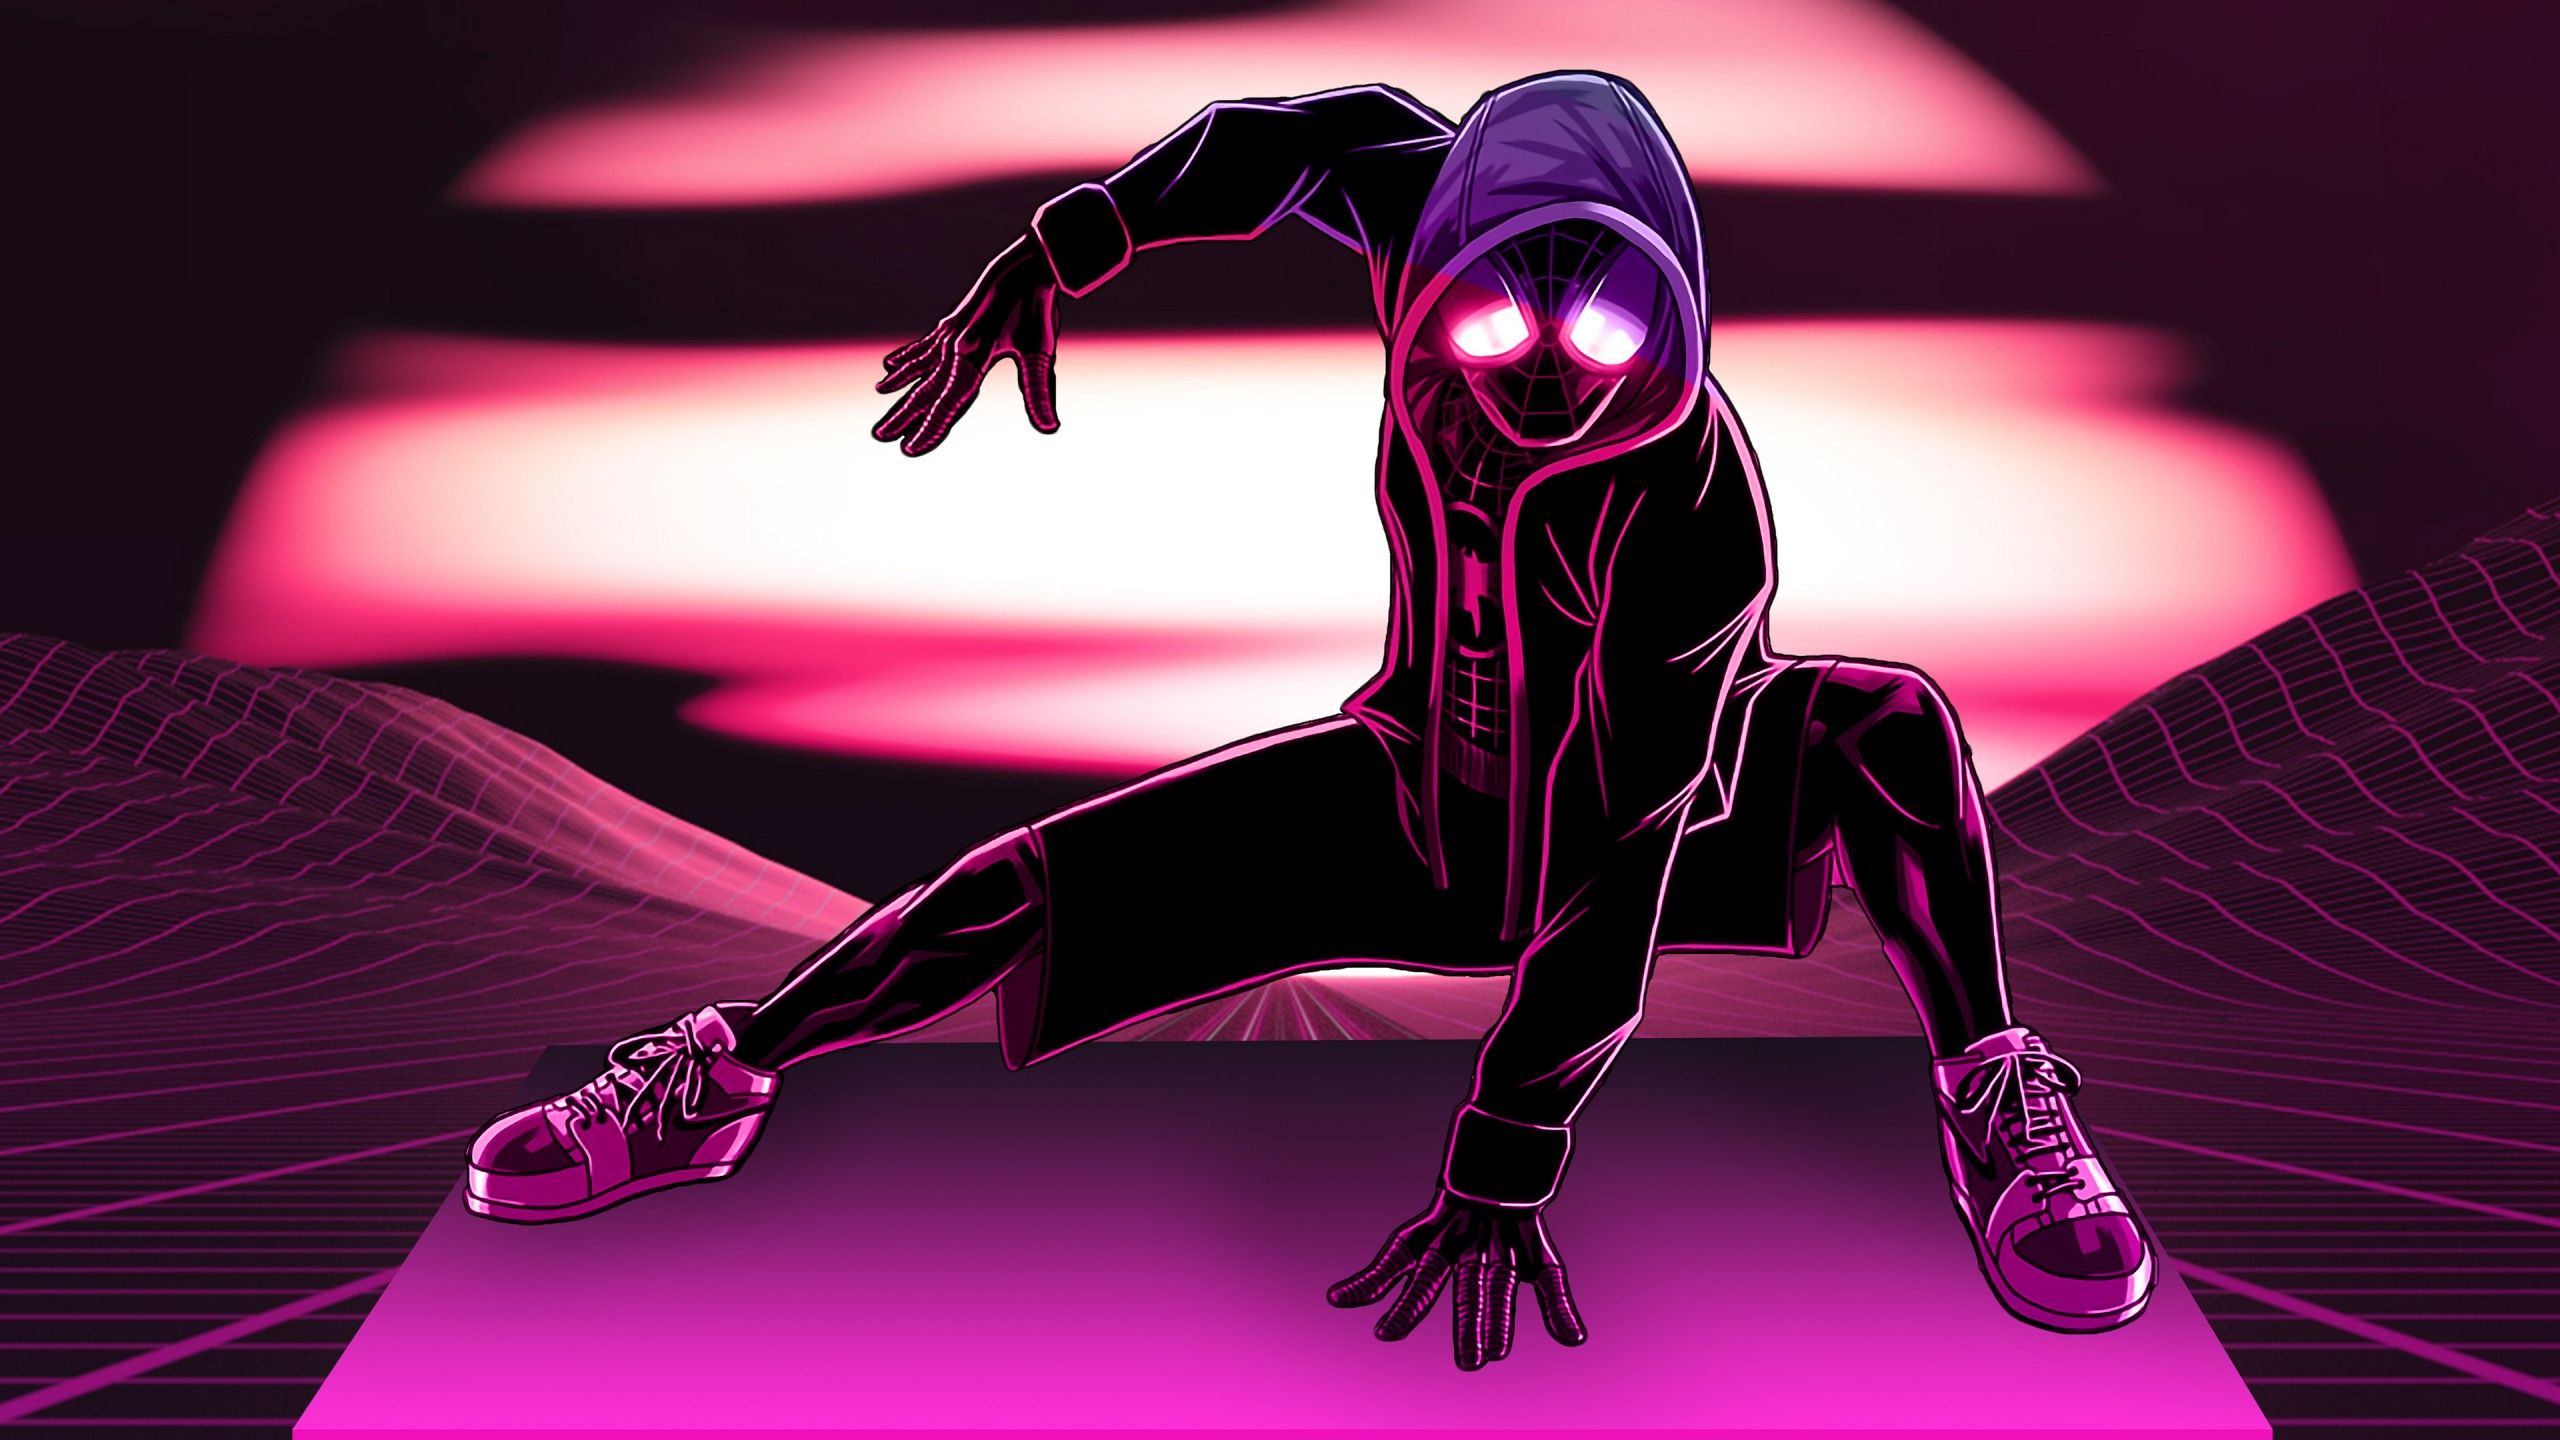 2560x1440 Miles Morales 4k Wallpaper Spider Man Neon Pink Graphics Cgi